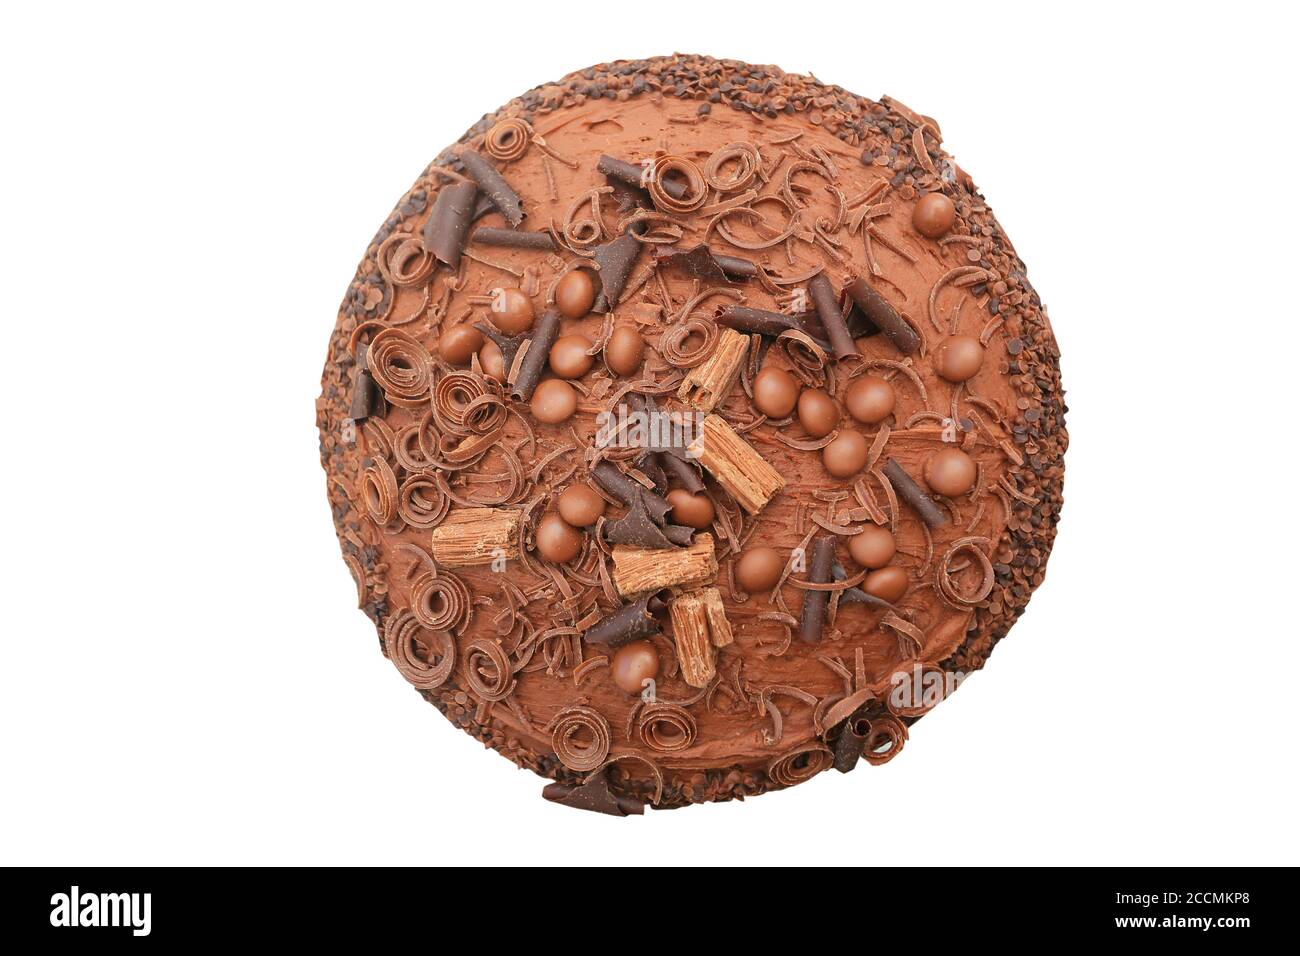 celebration and treat time with a big chocolate cake with choc swirls Stock Photo